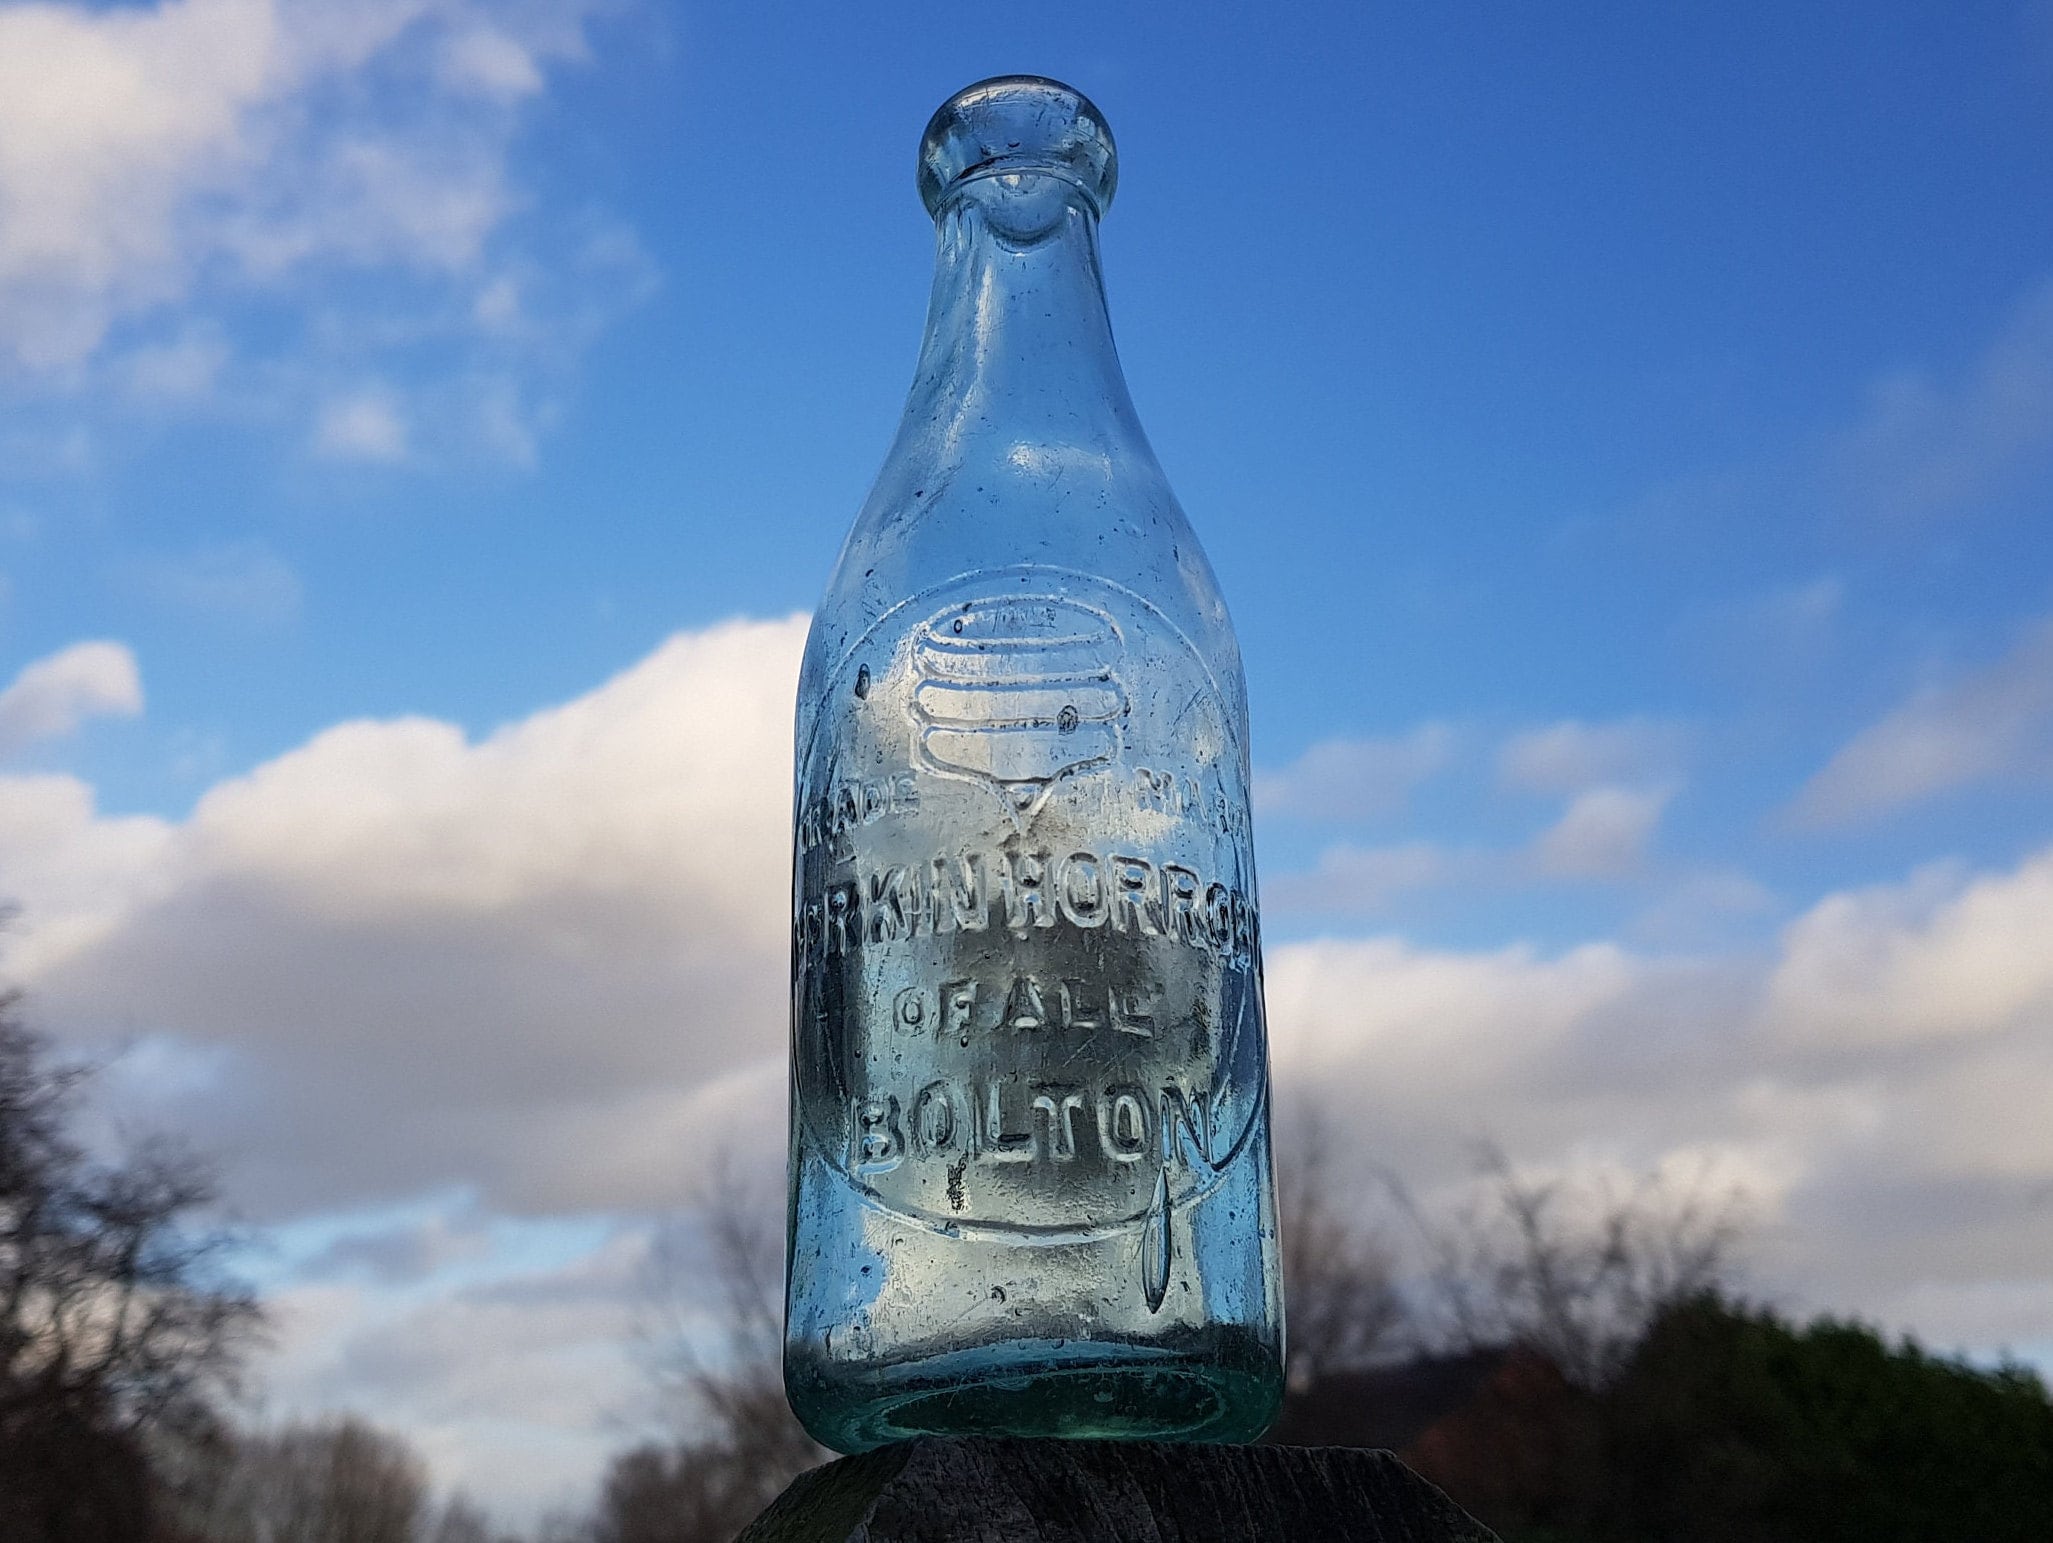 Glasstic BPA Free Glass Water Bottle - Retro Design